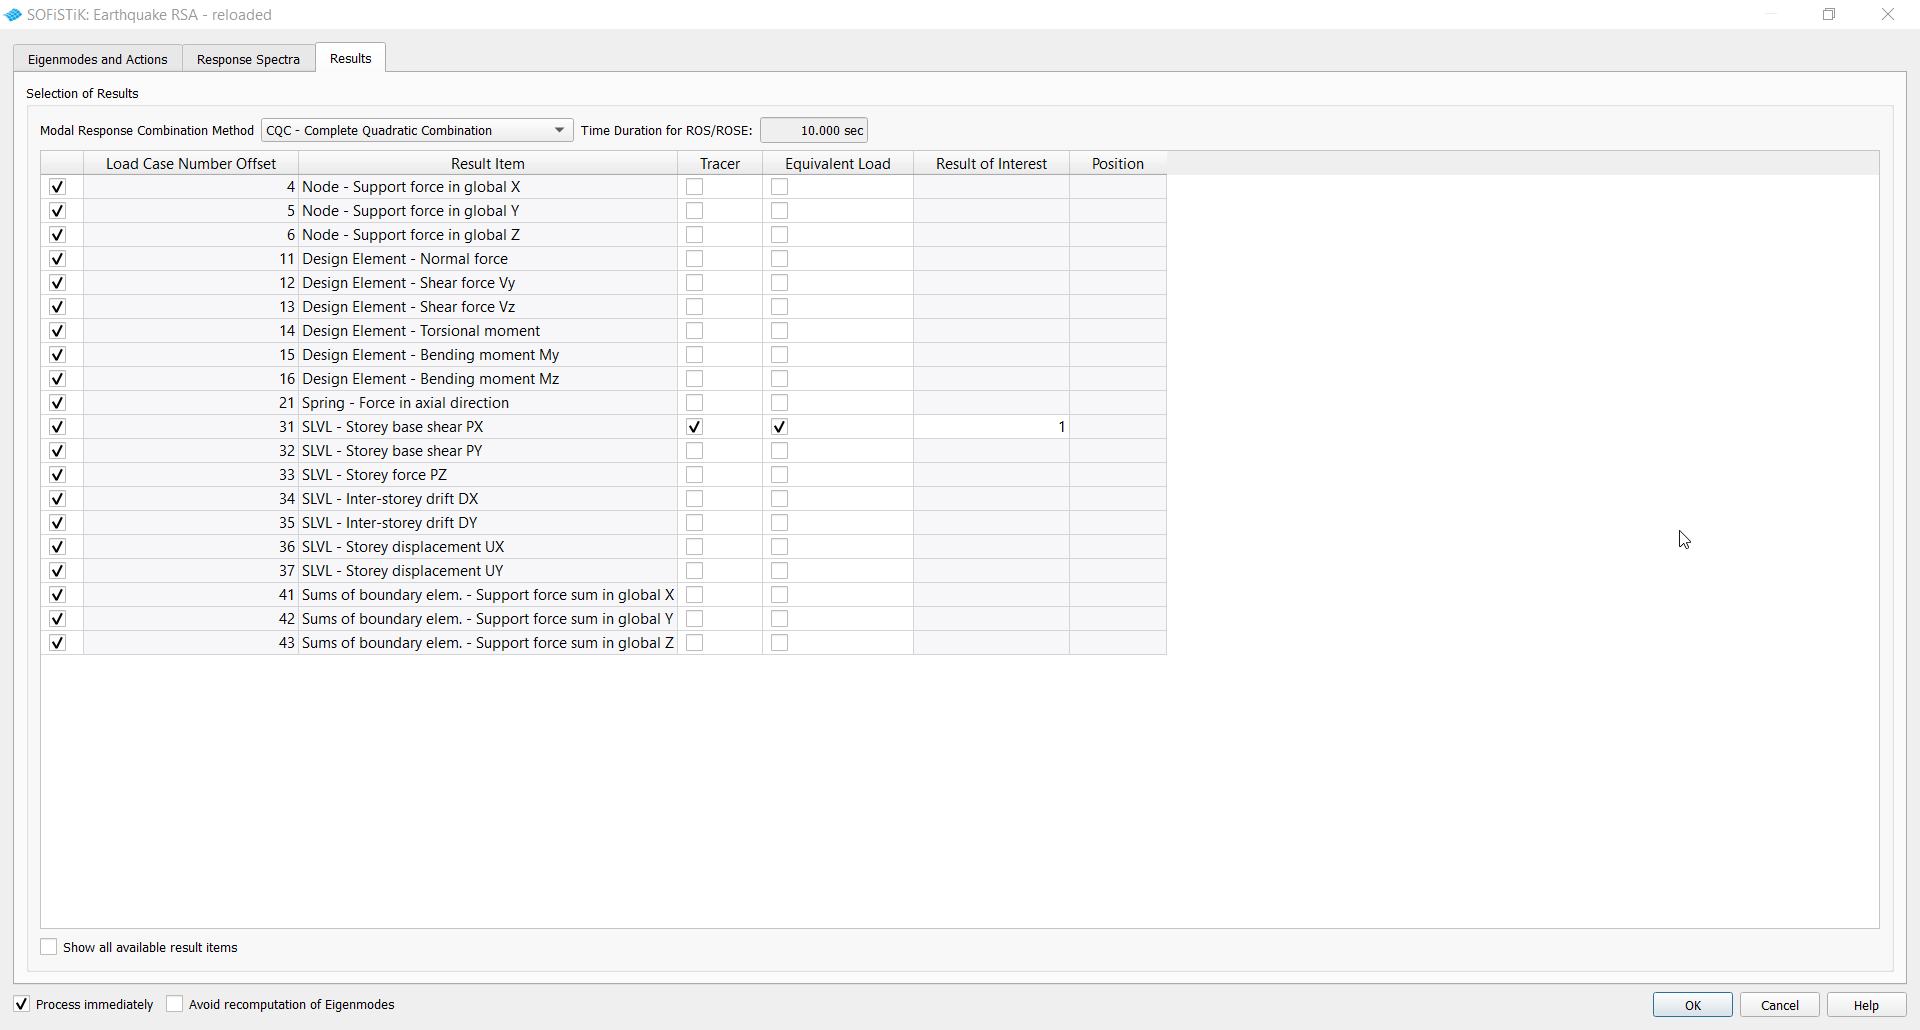 GUI Task Earthquake RSA reloaded - Results Tab